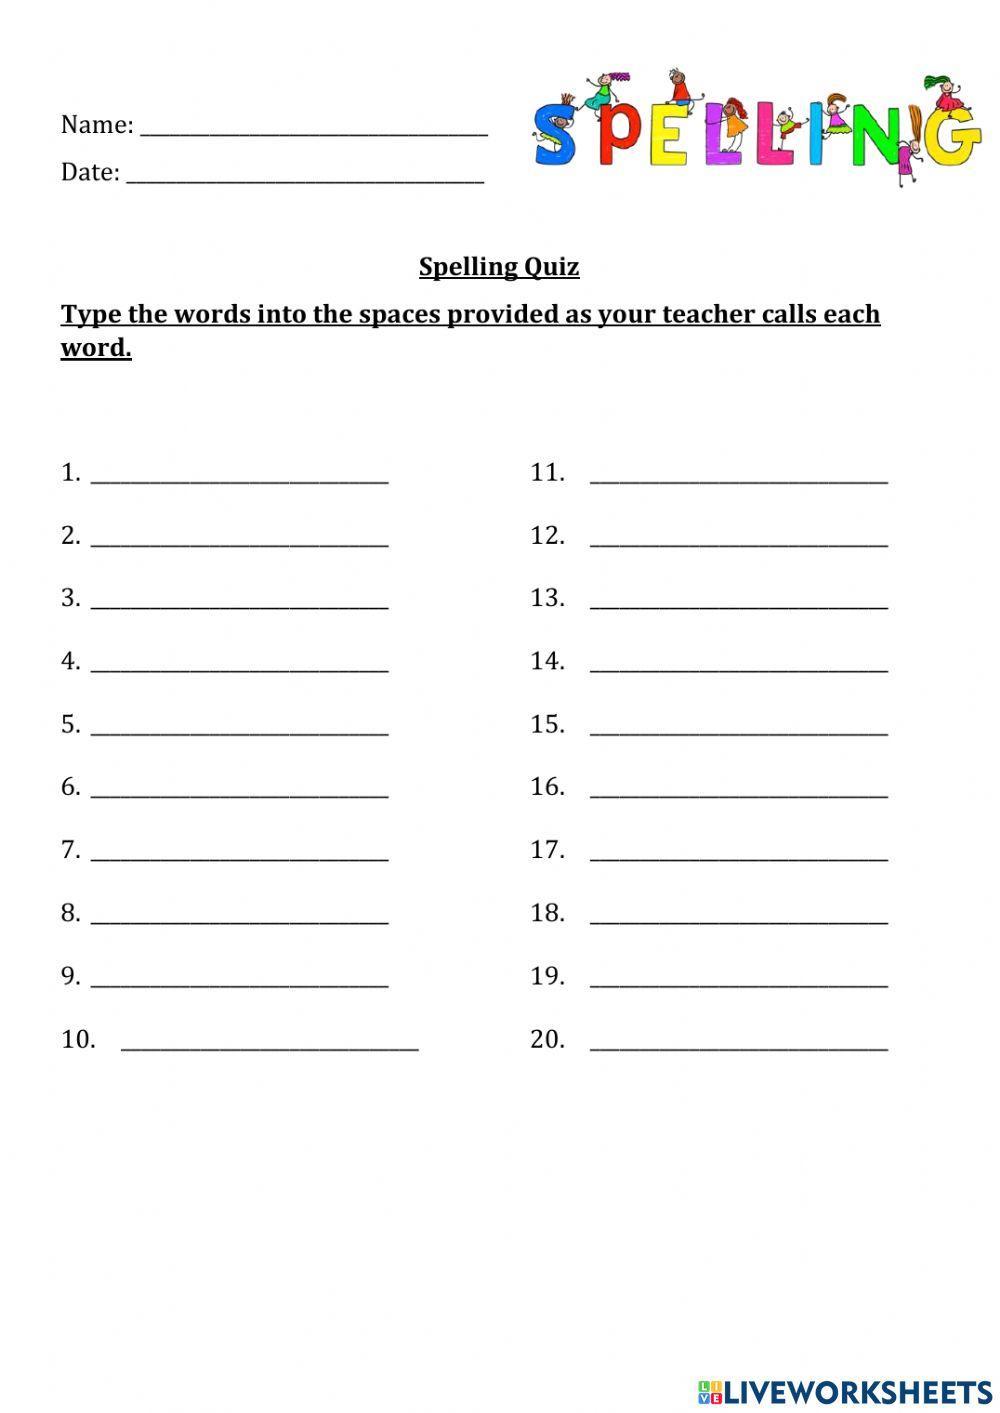 Spelling Quiz Blank